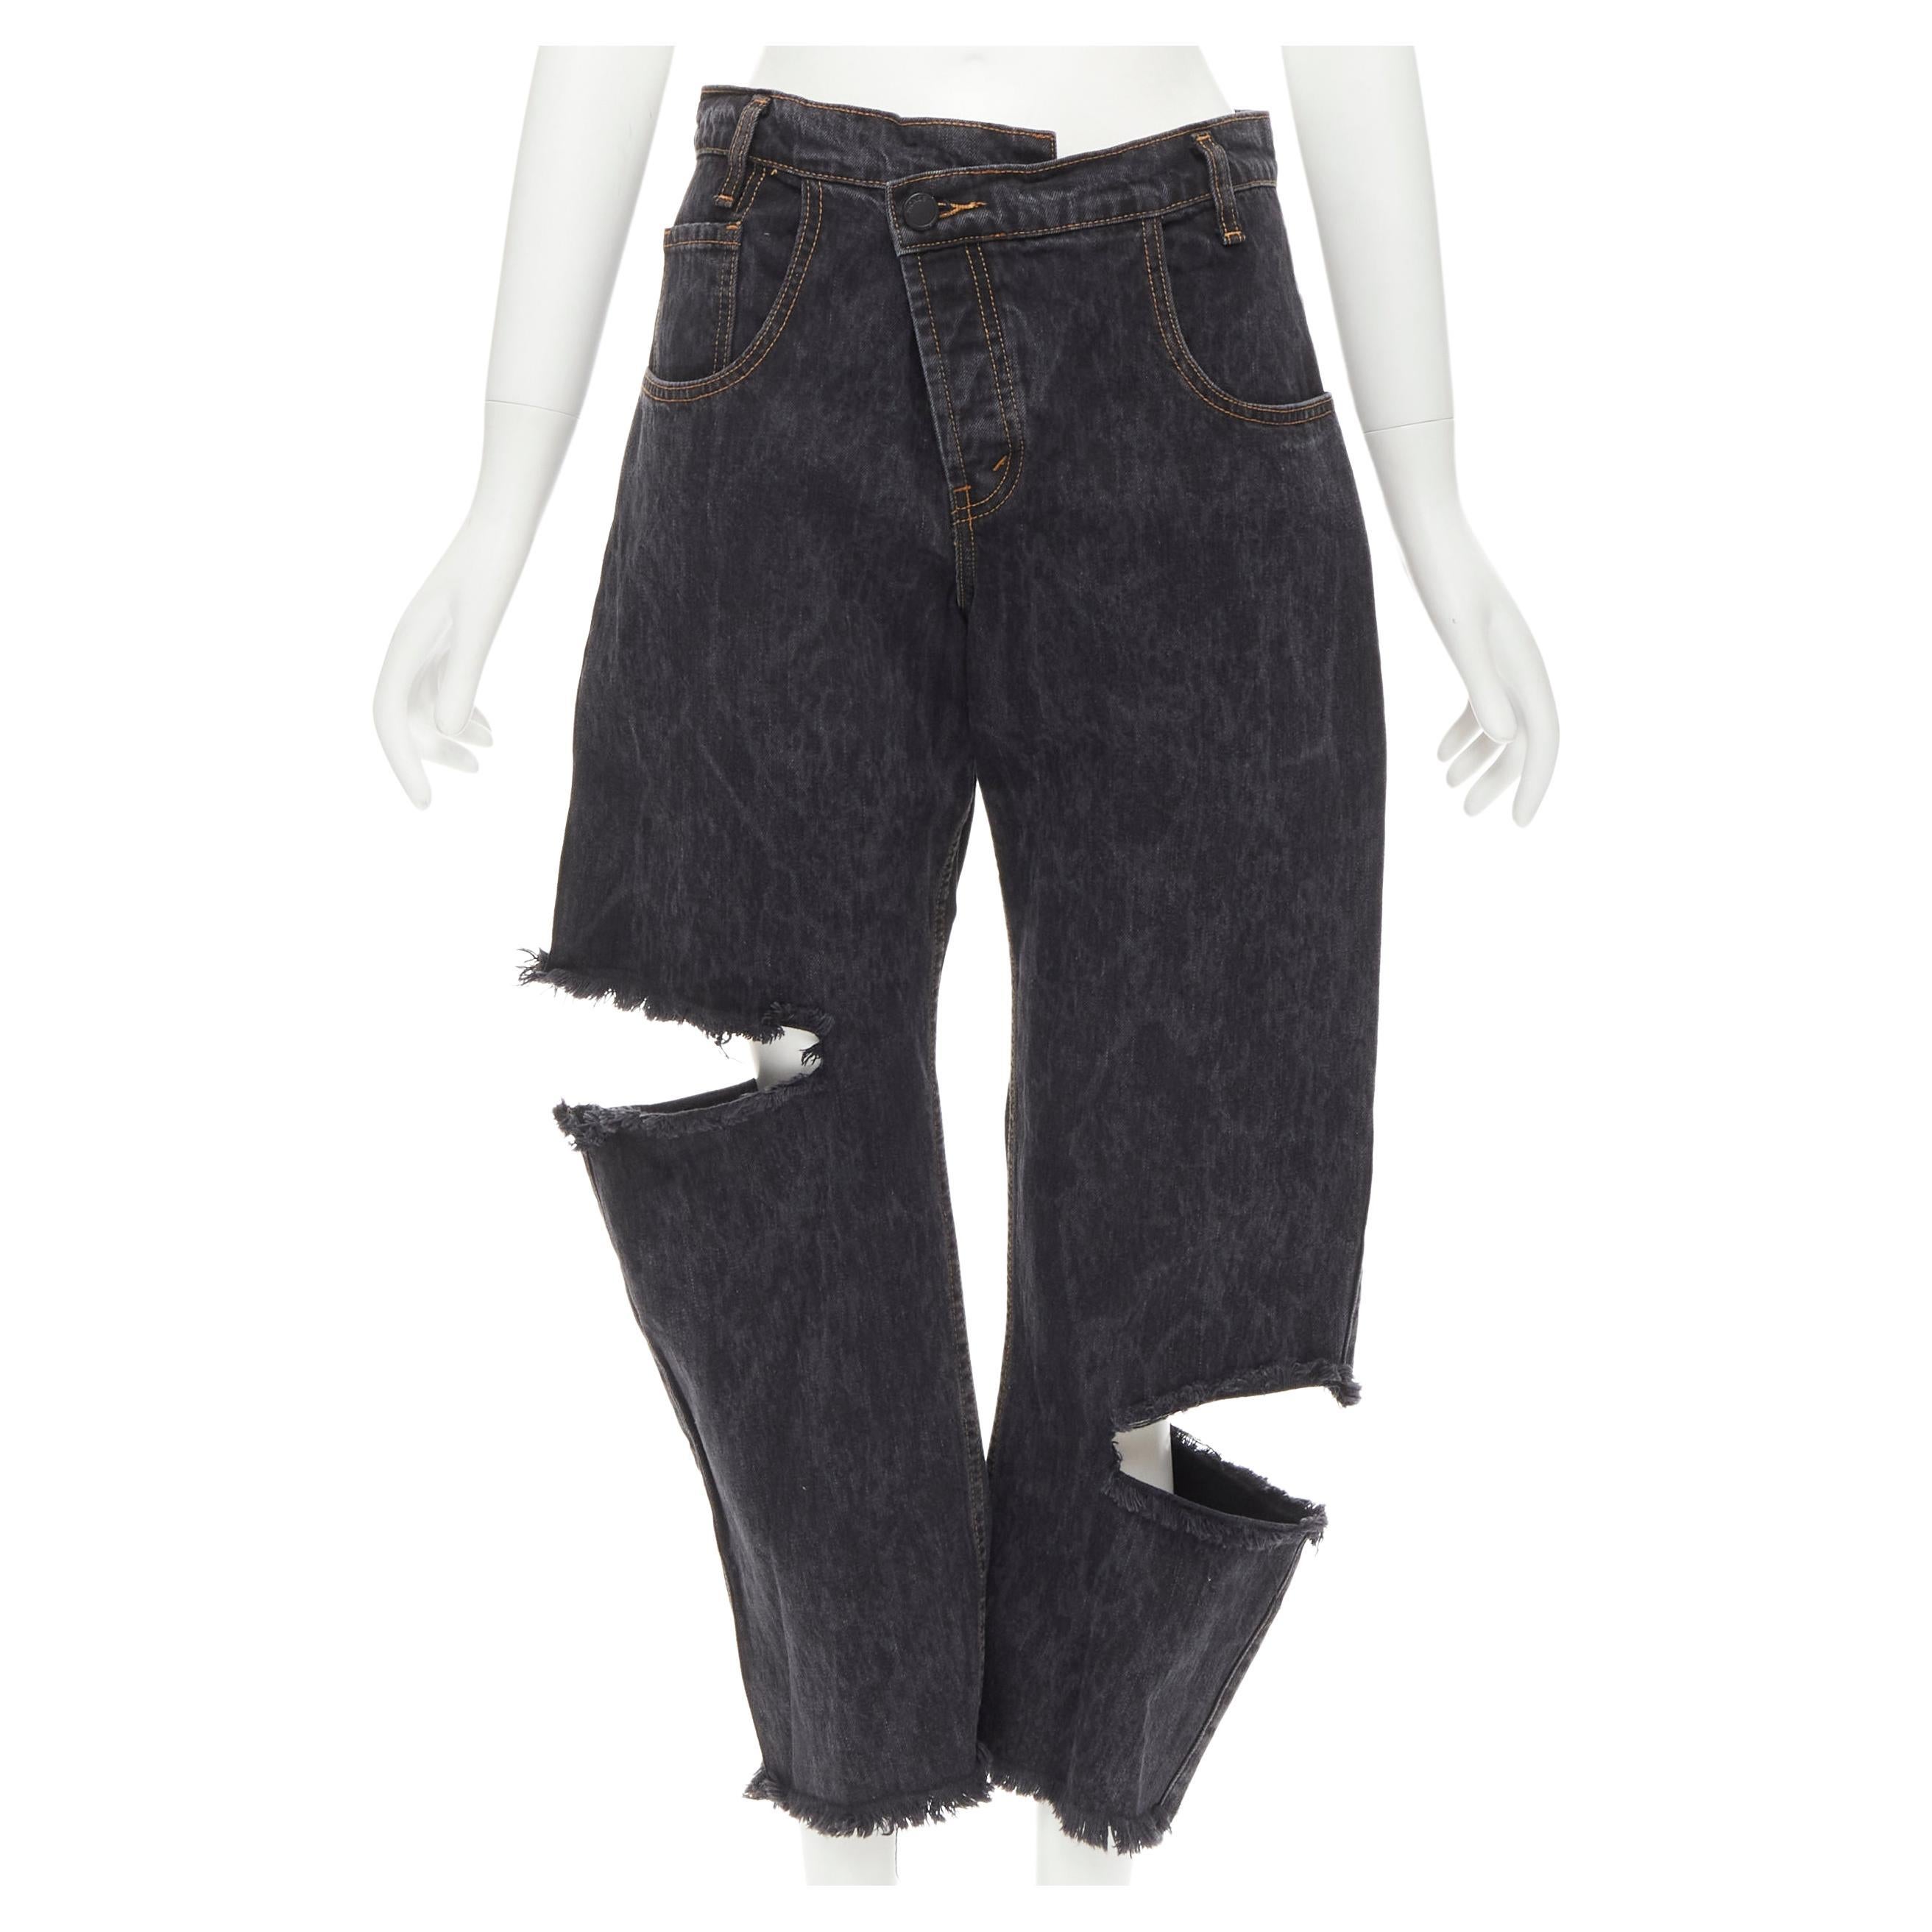 MONSE dark grey washed denim slit cut out deconstructed jeans US4 S